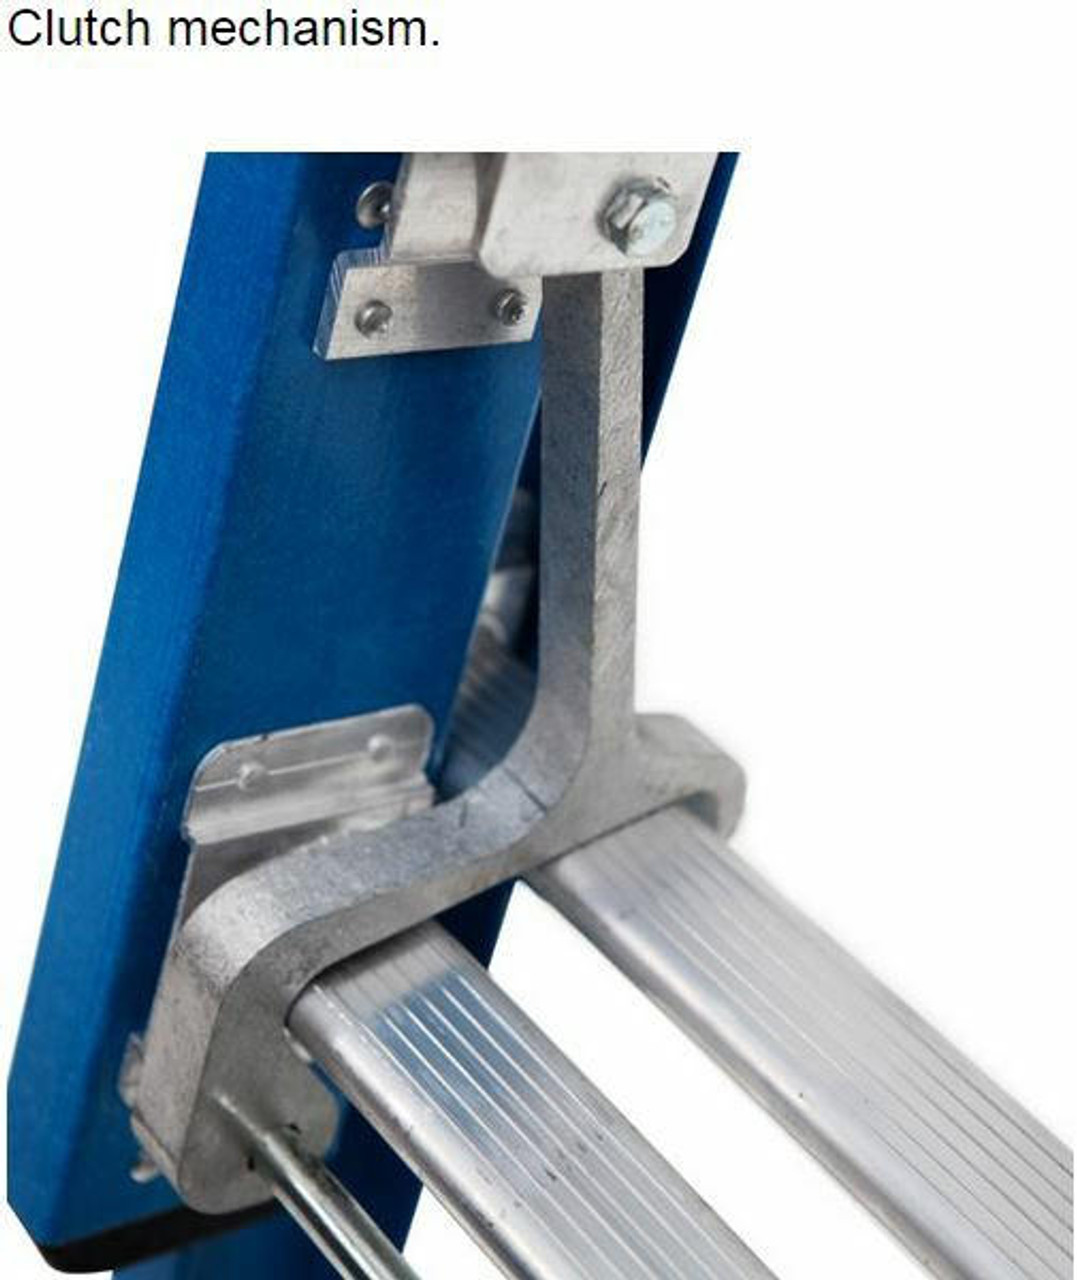 Bailey Extension Ladder Fibreglass 150kg 3.3-5.1m Industrial FXN10/17 FS20187